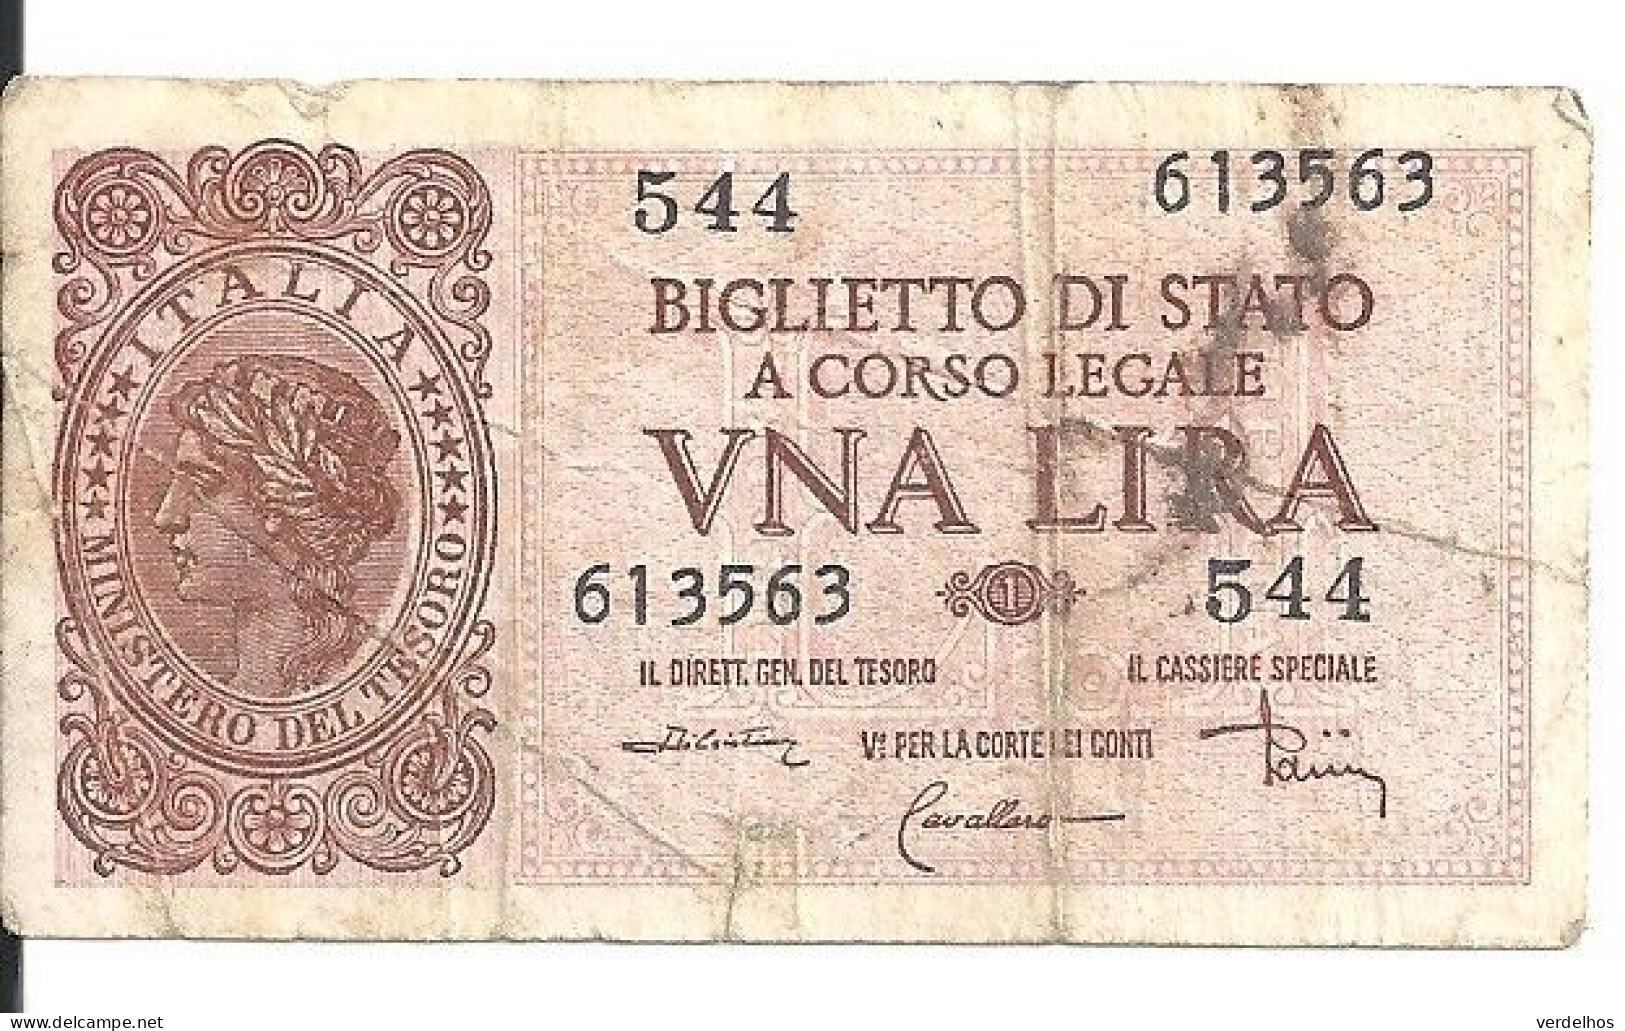 ITALIE 1 LIRE 1944 VG+ P 29 C - Regno D'Italia – 1 Lira